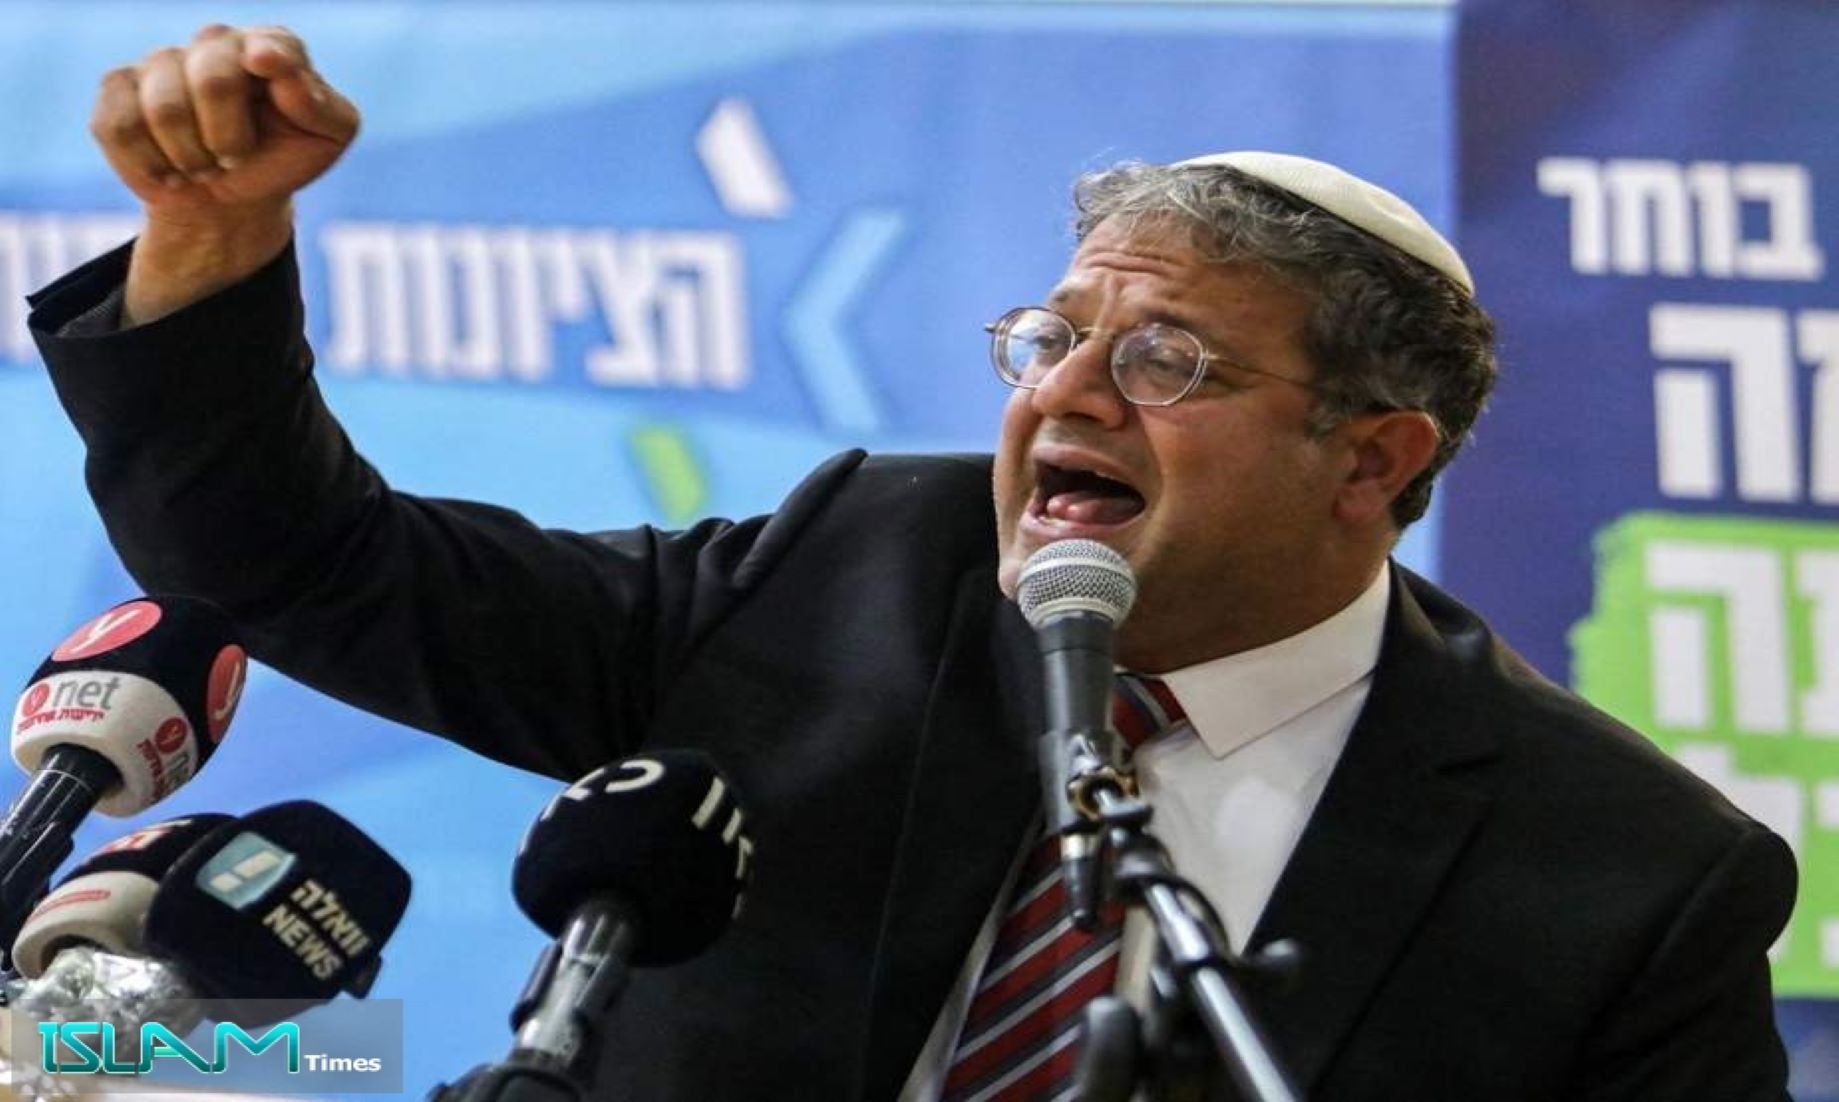 Iran Blasted Israeli Minister’s “Sacrilegious” Visit To Al-Aqsa Compound